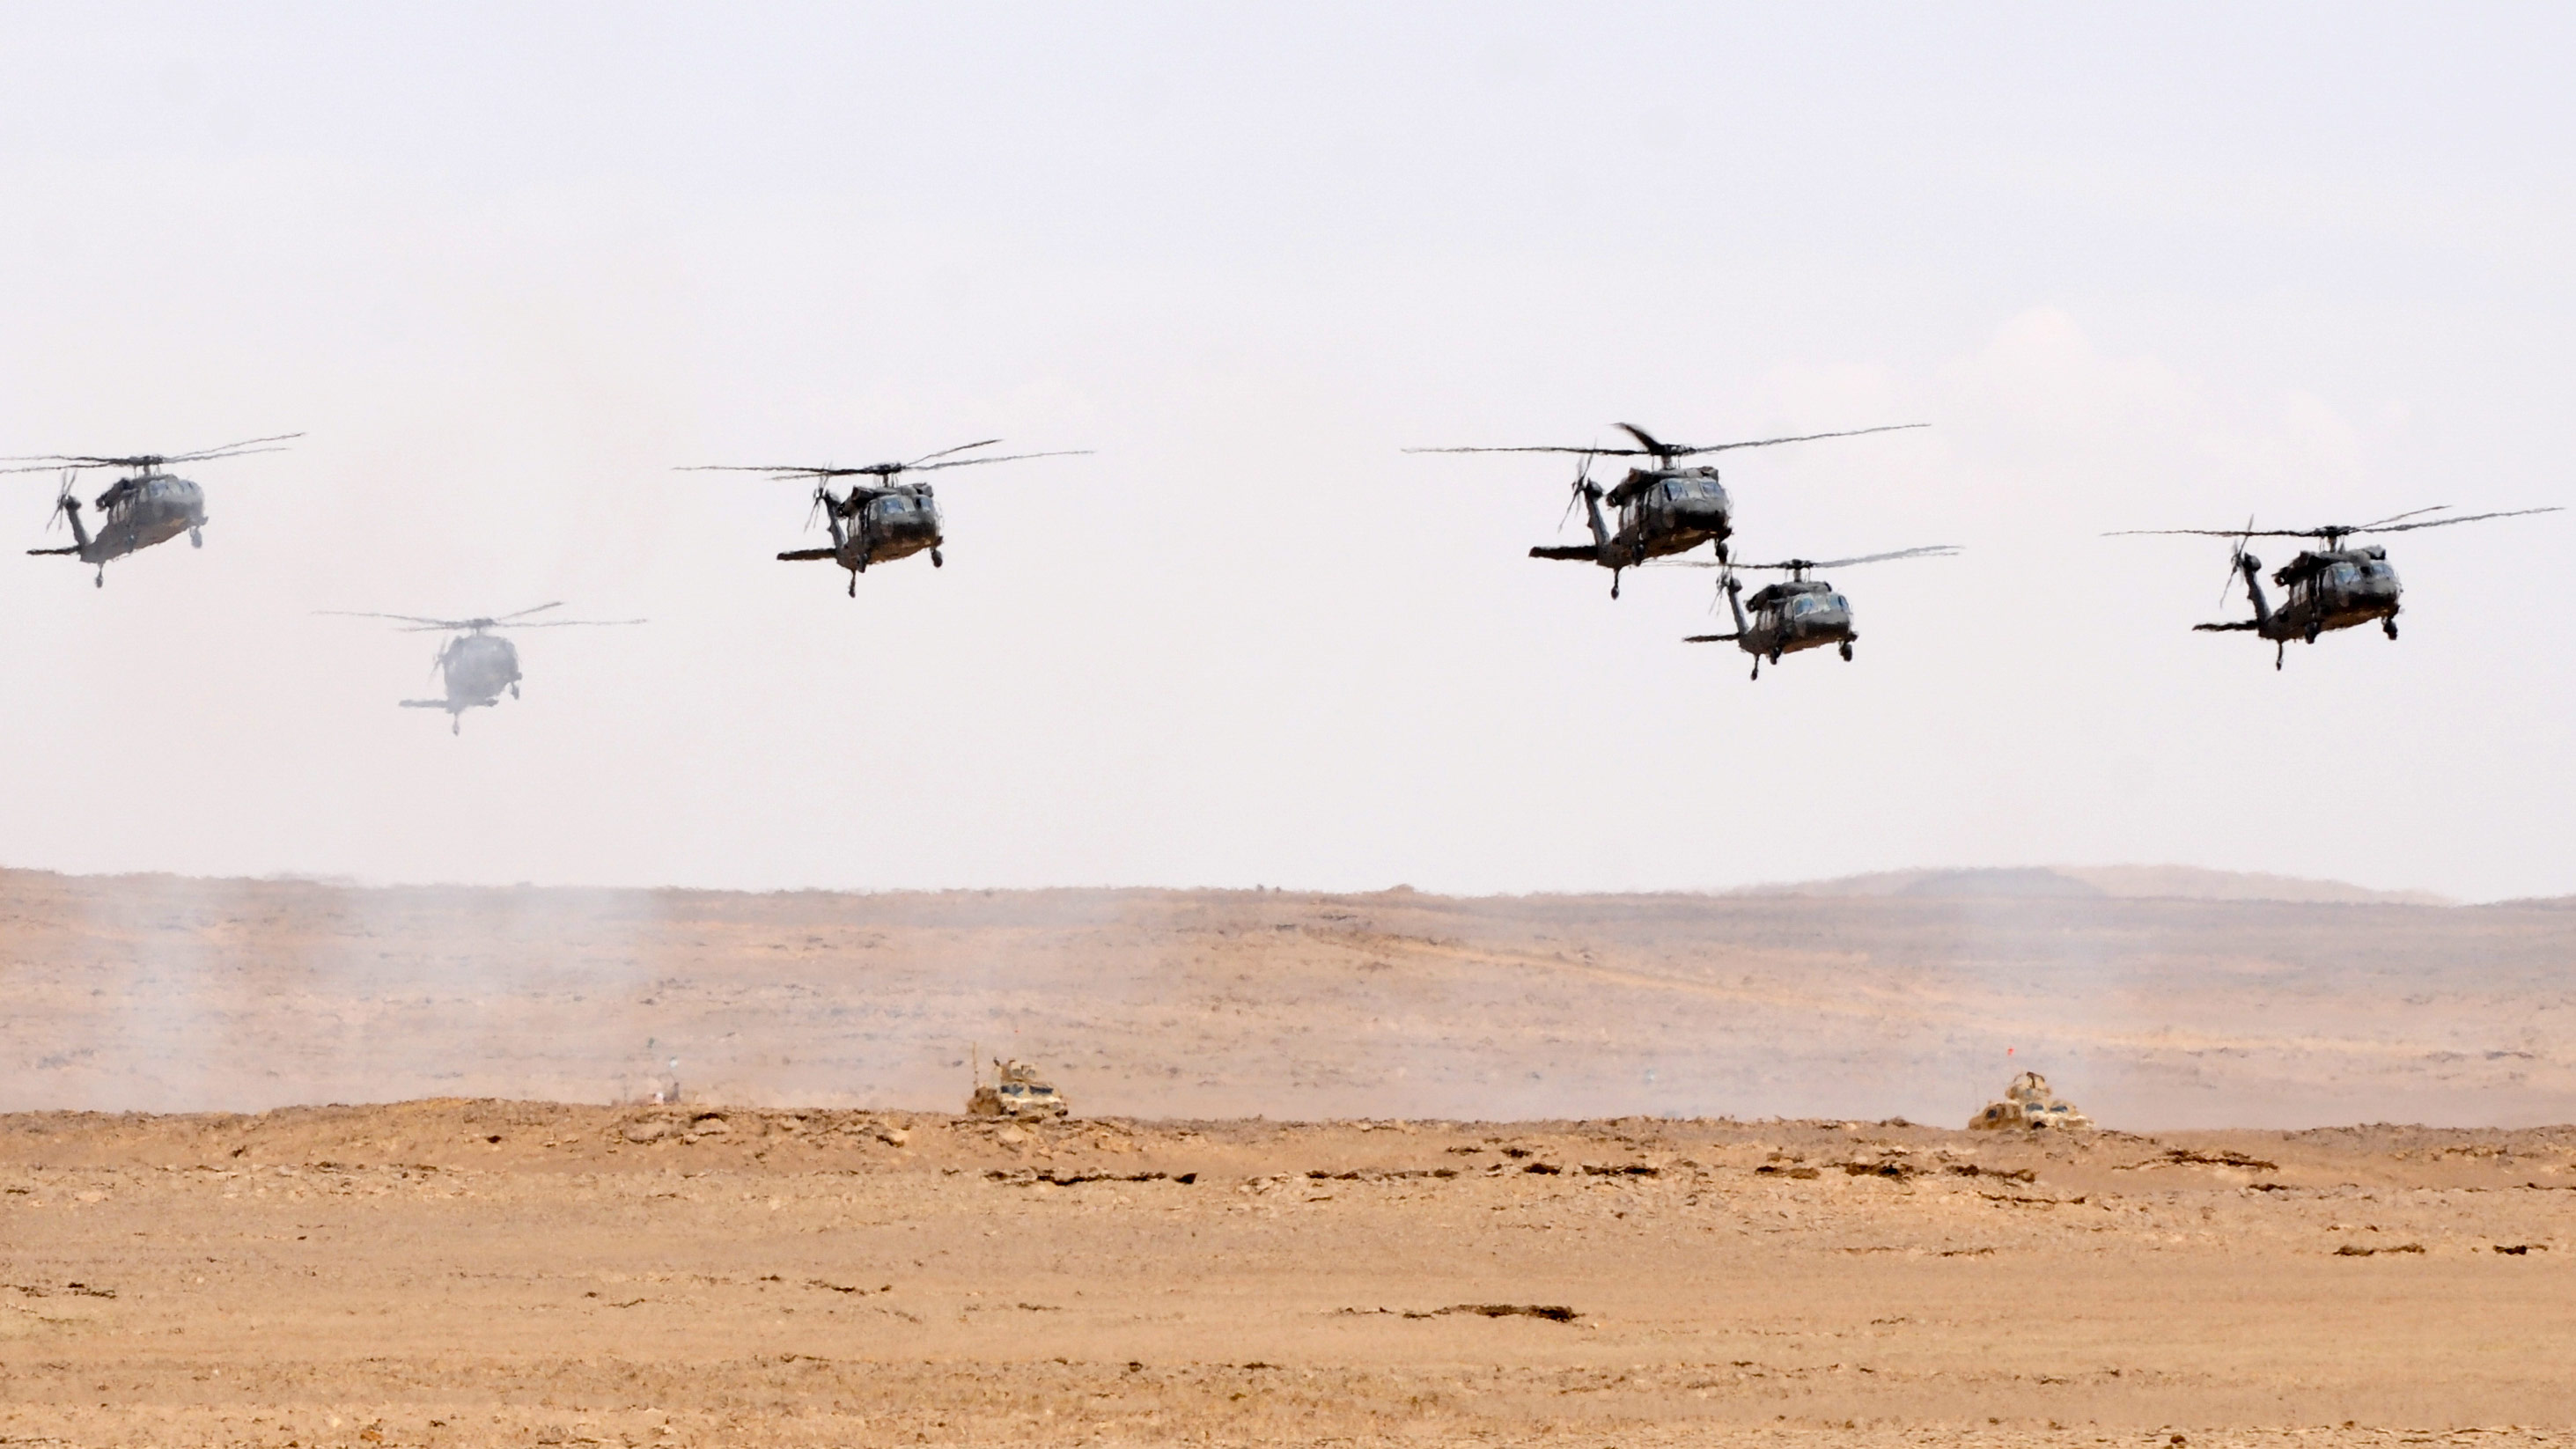 UH-60 Black Hawk helicopters in Saudi Arabia